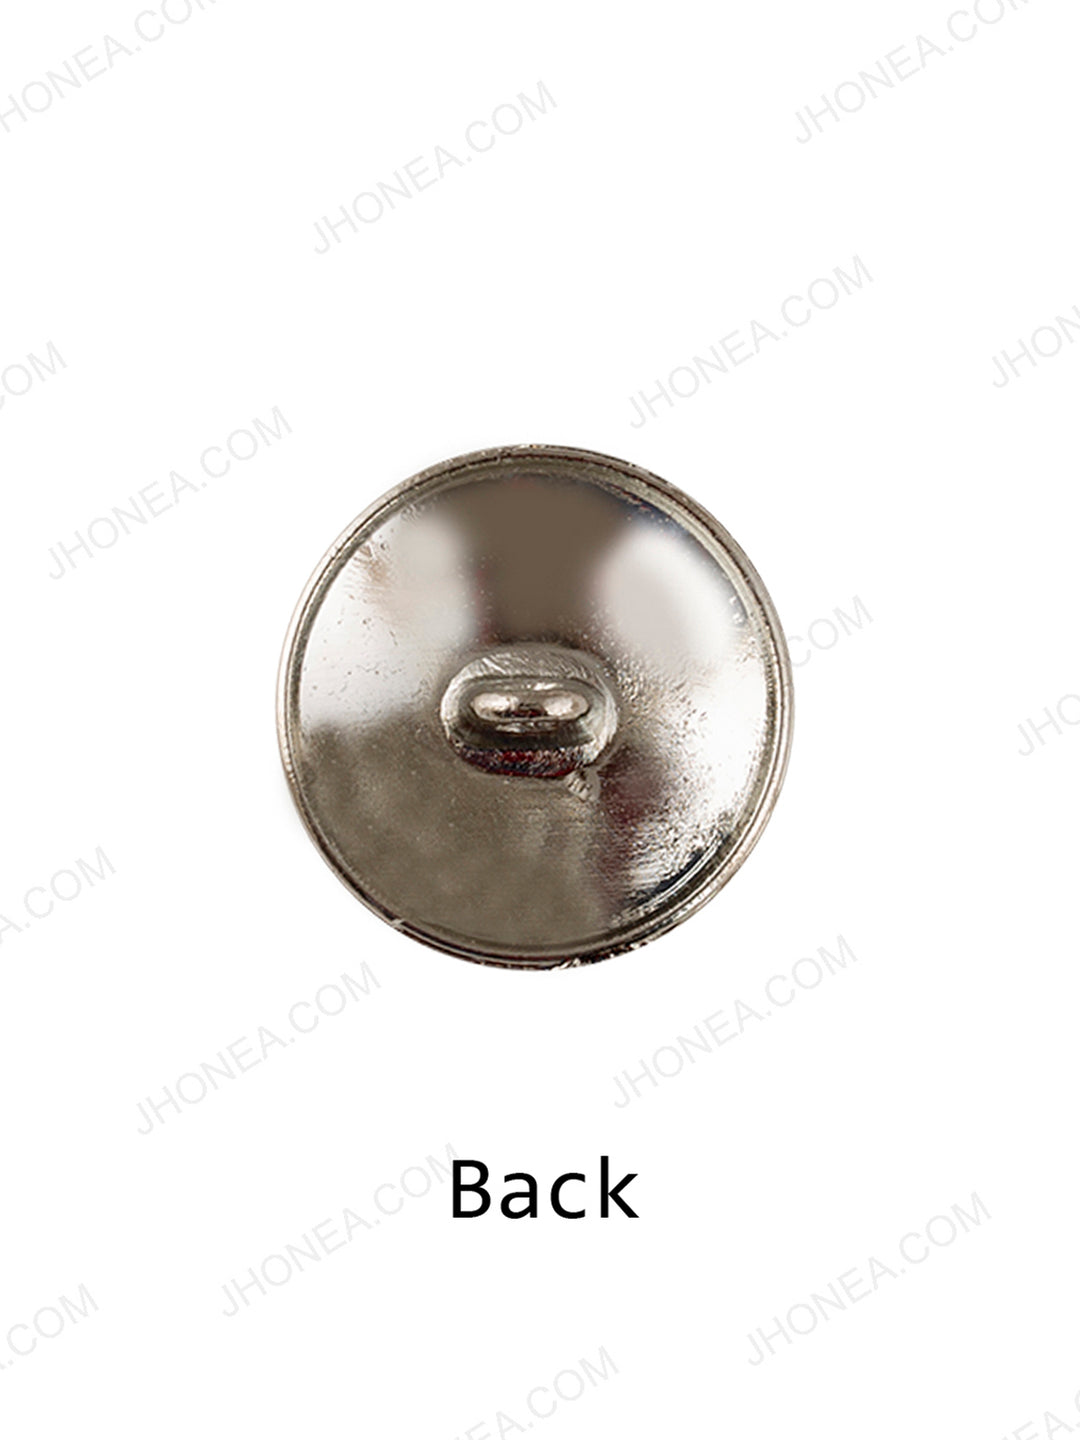 Black & Silver Designer Round Engraved Coat Button